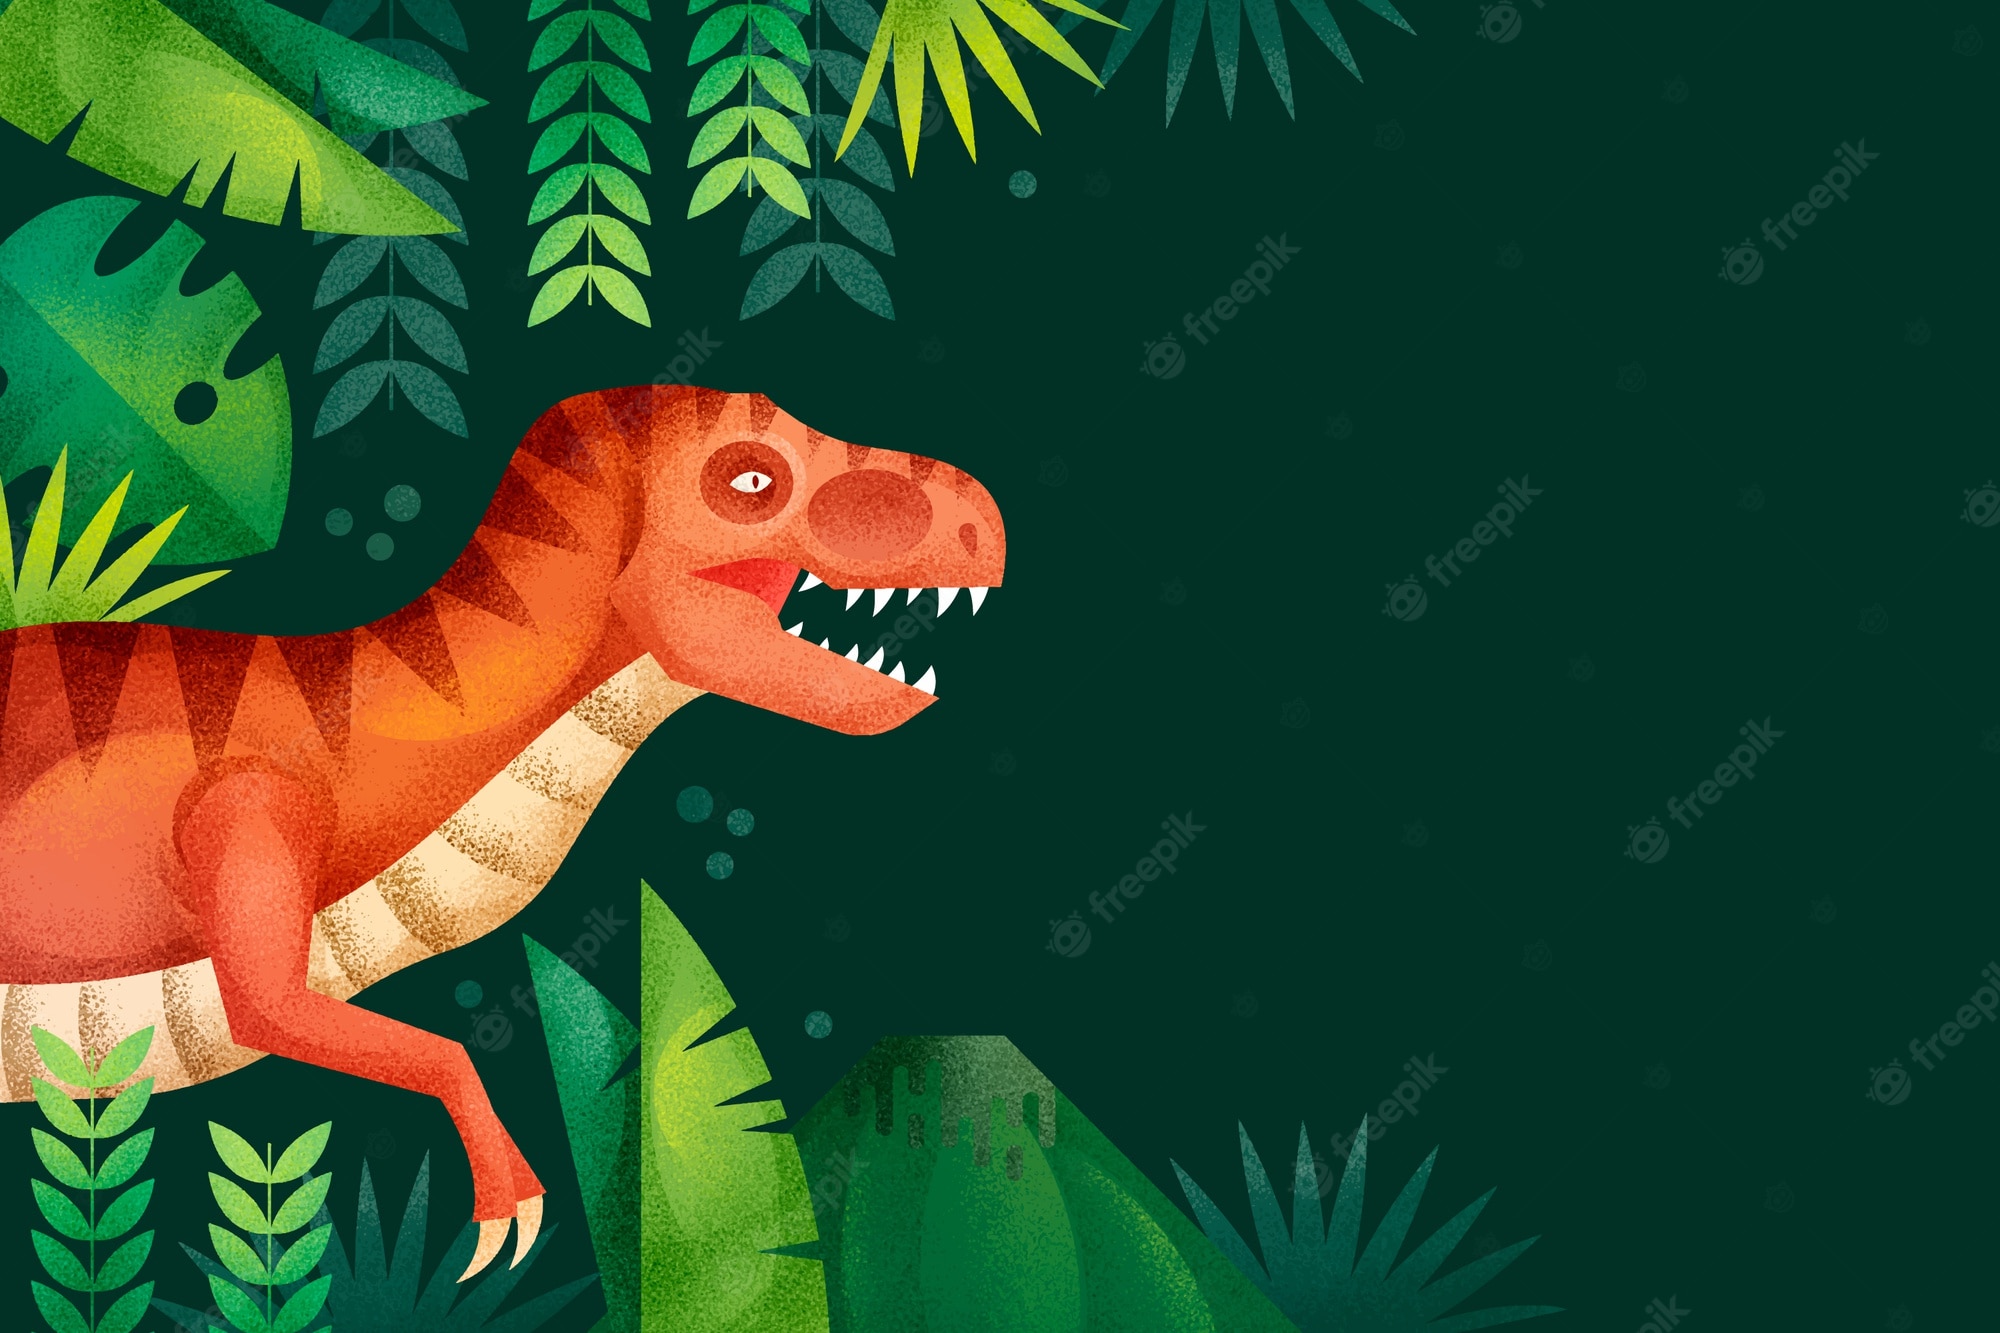 Dinosaur Phone Wallpapers